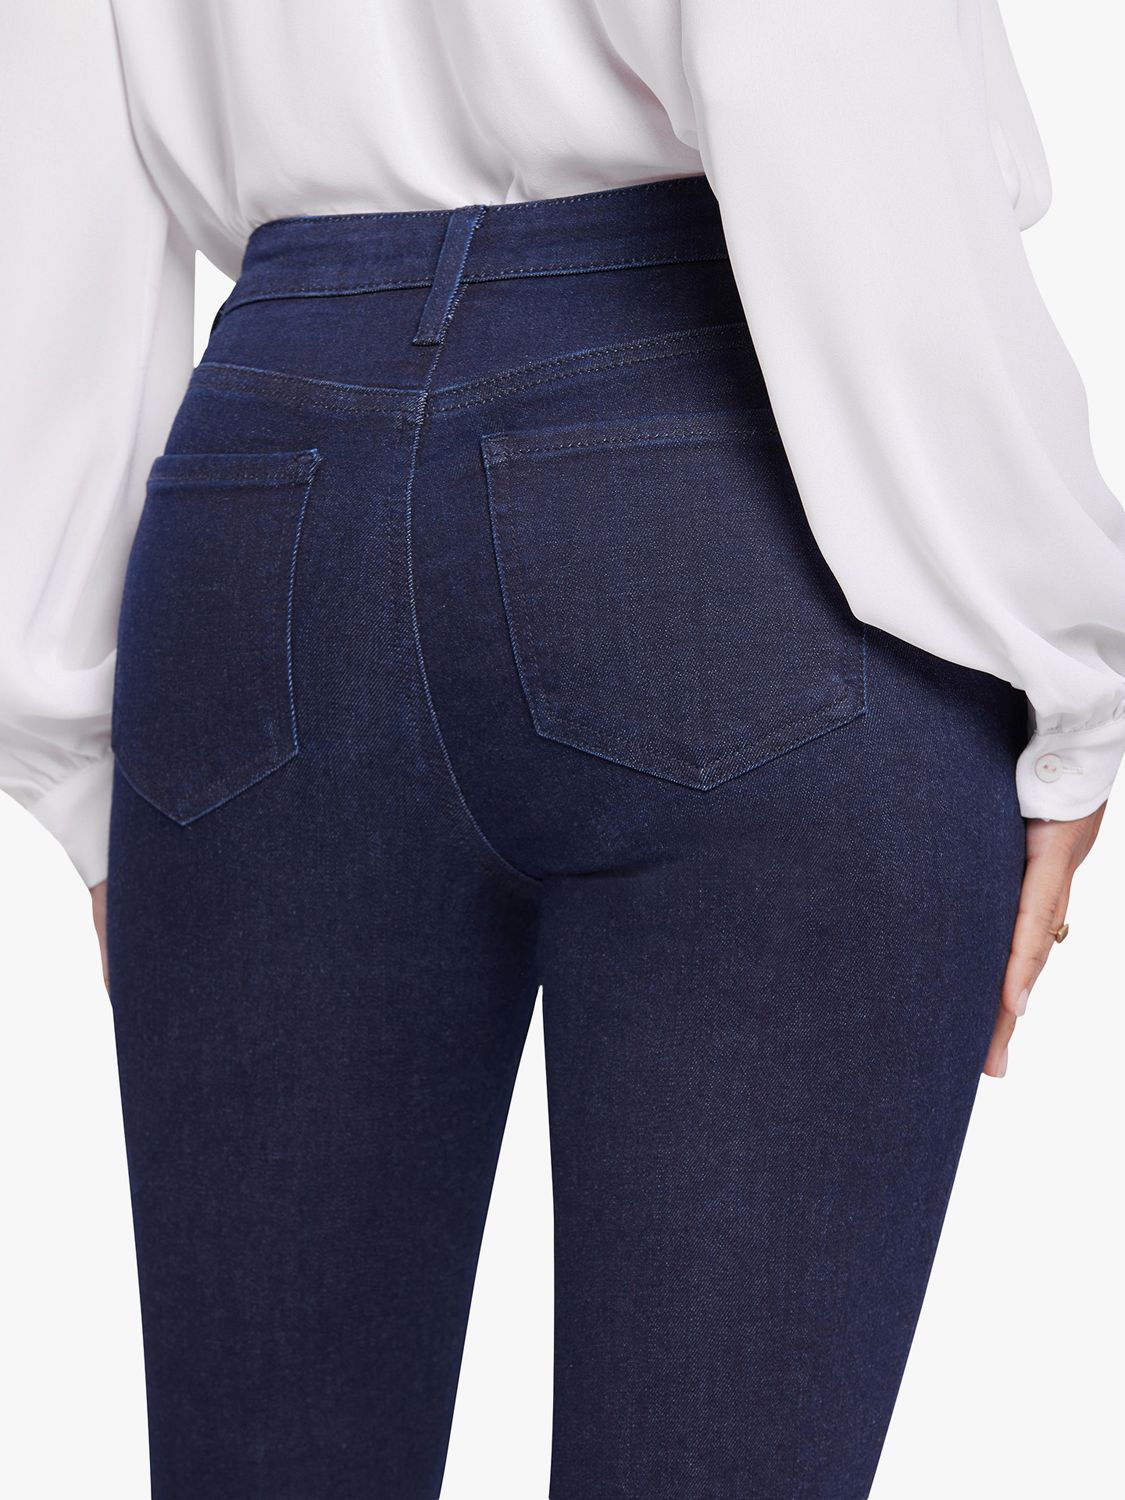 NYDJ Ami Skinny Jeans, Rinse at John Lewis & Partners